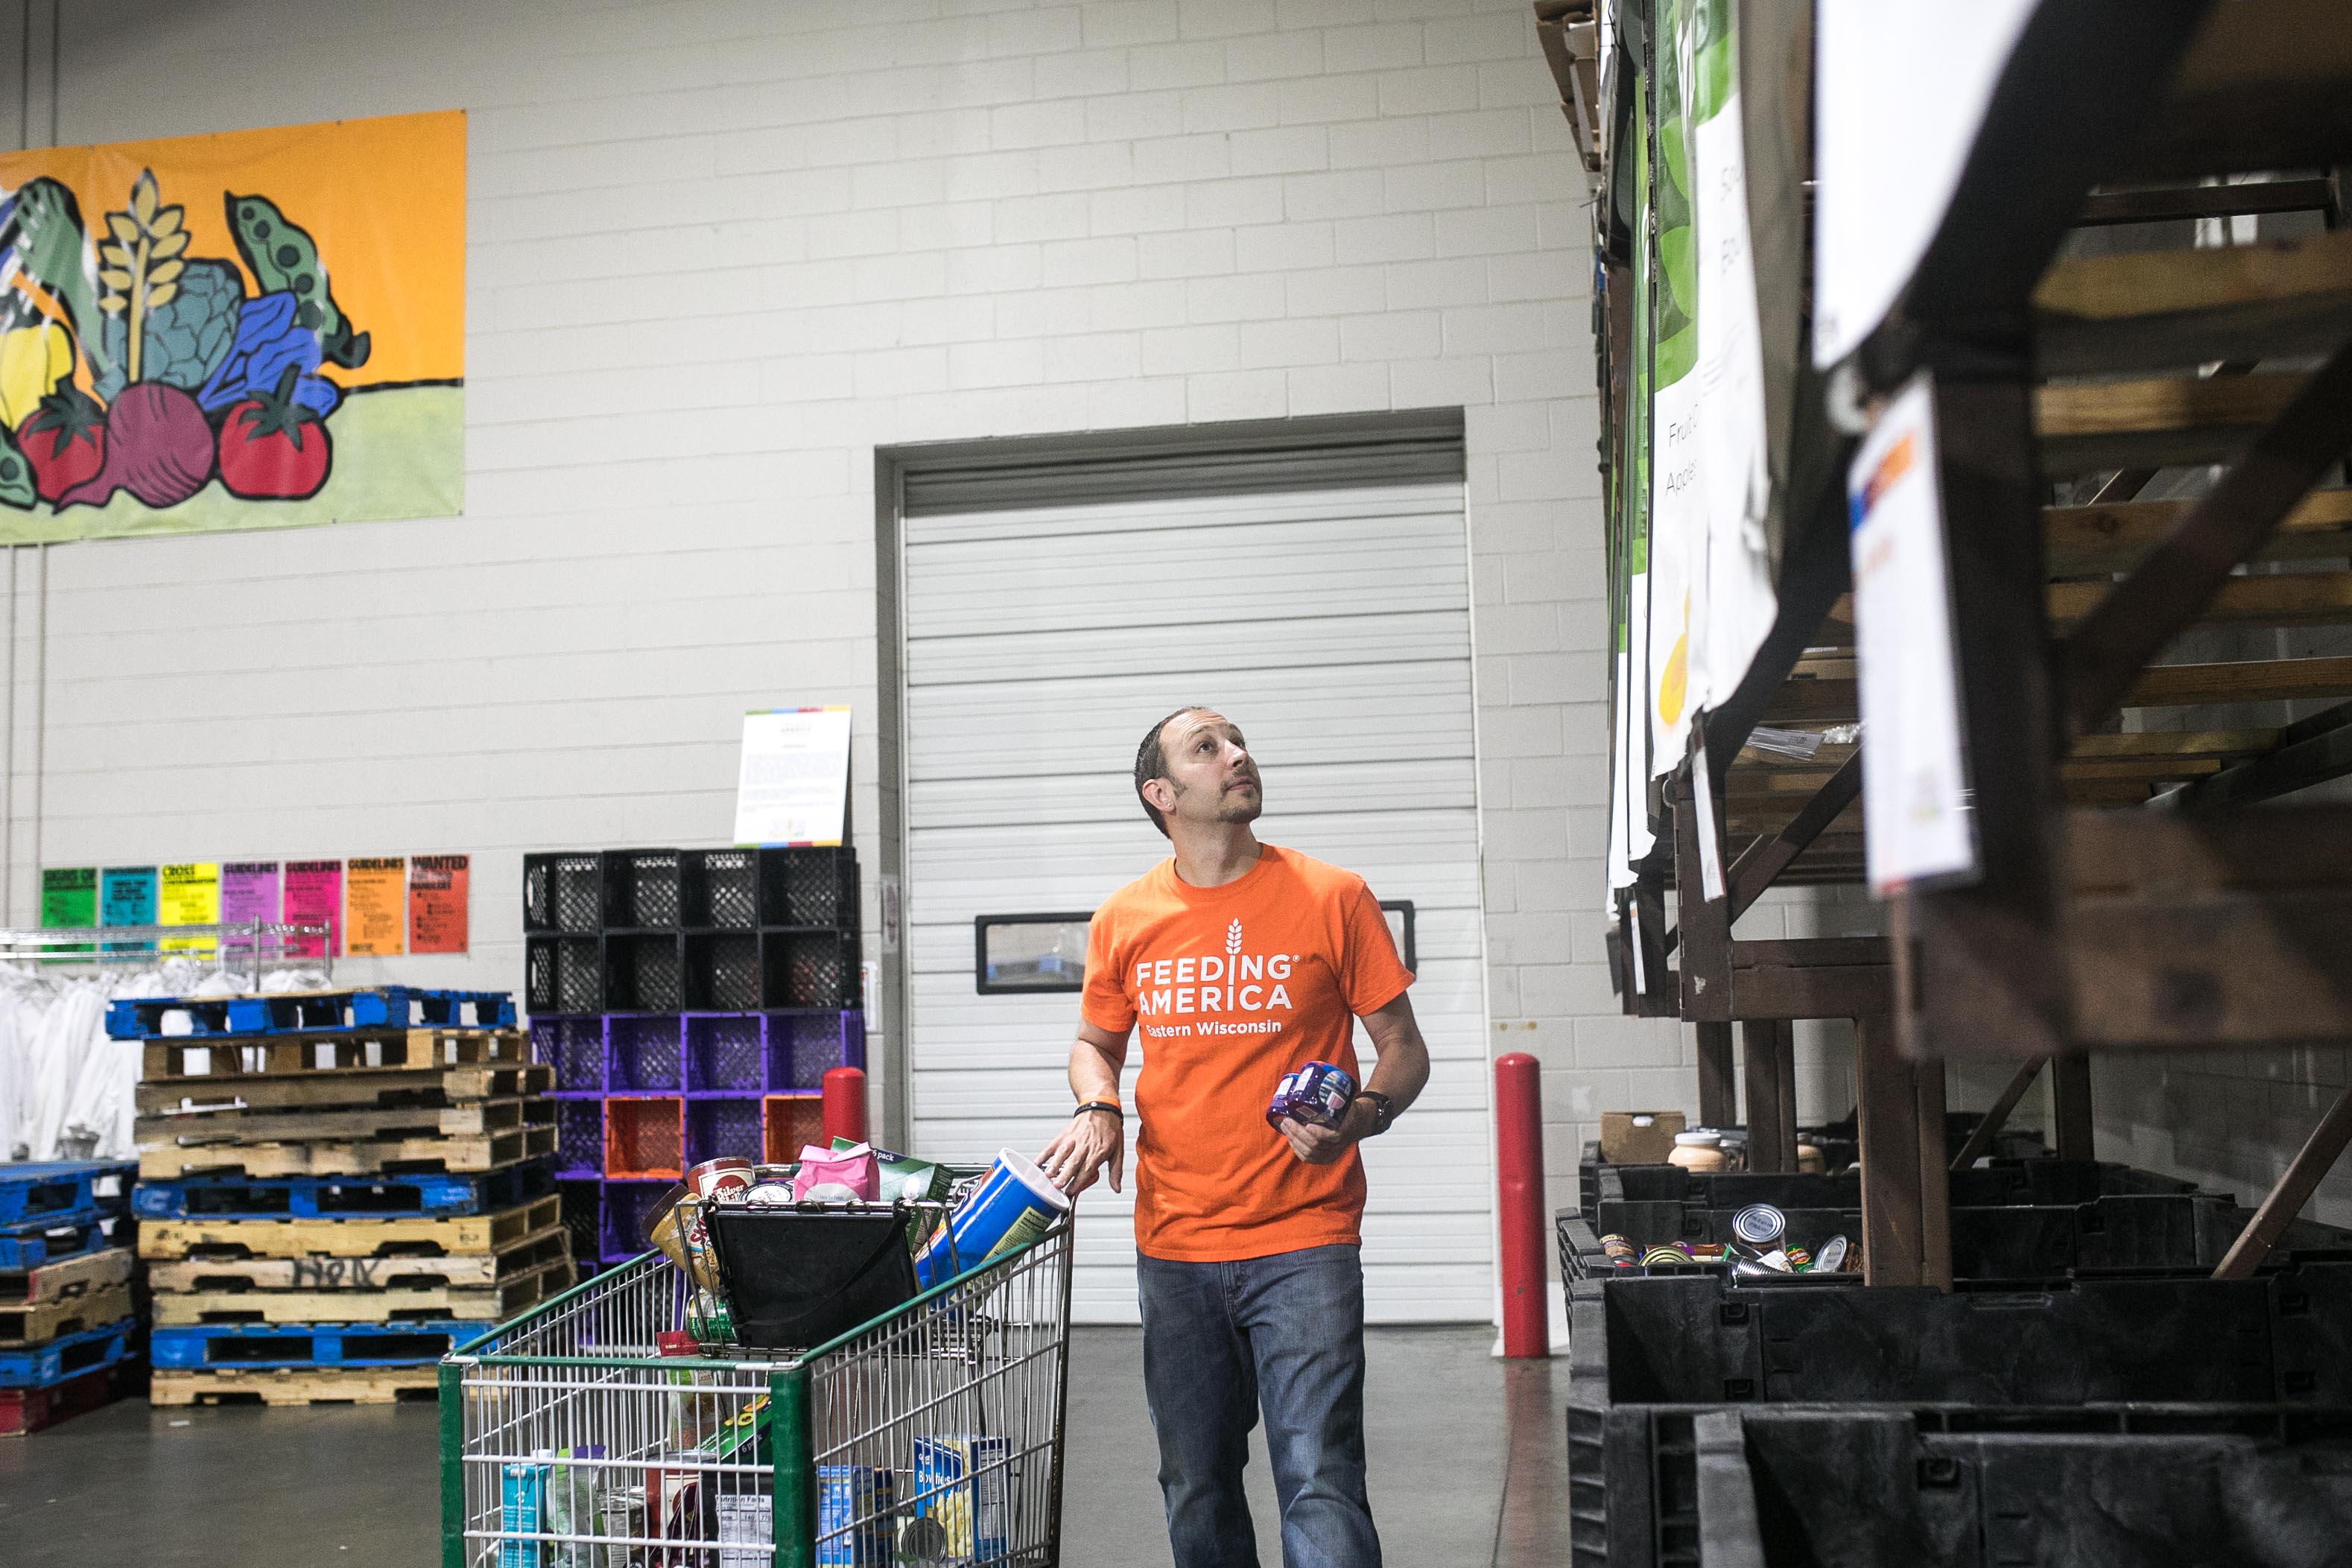 Warren wearing an orange Feeding America Eastern Wisconsin shirt while pushing a cart full of food to sort into bins.